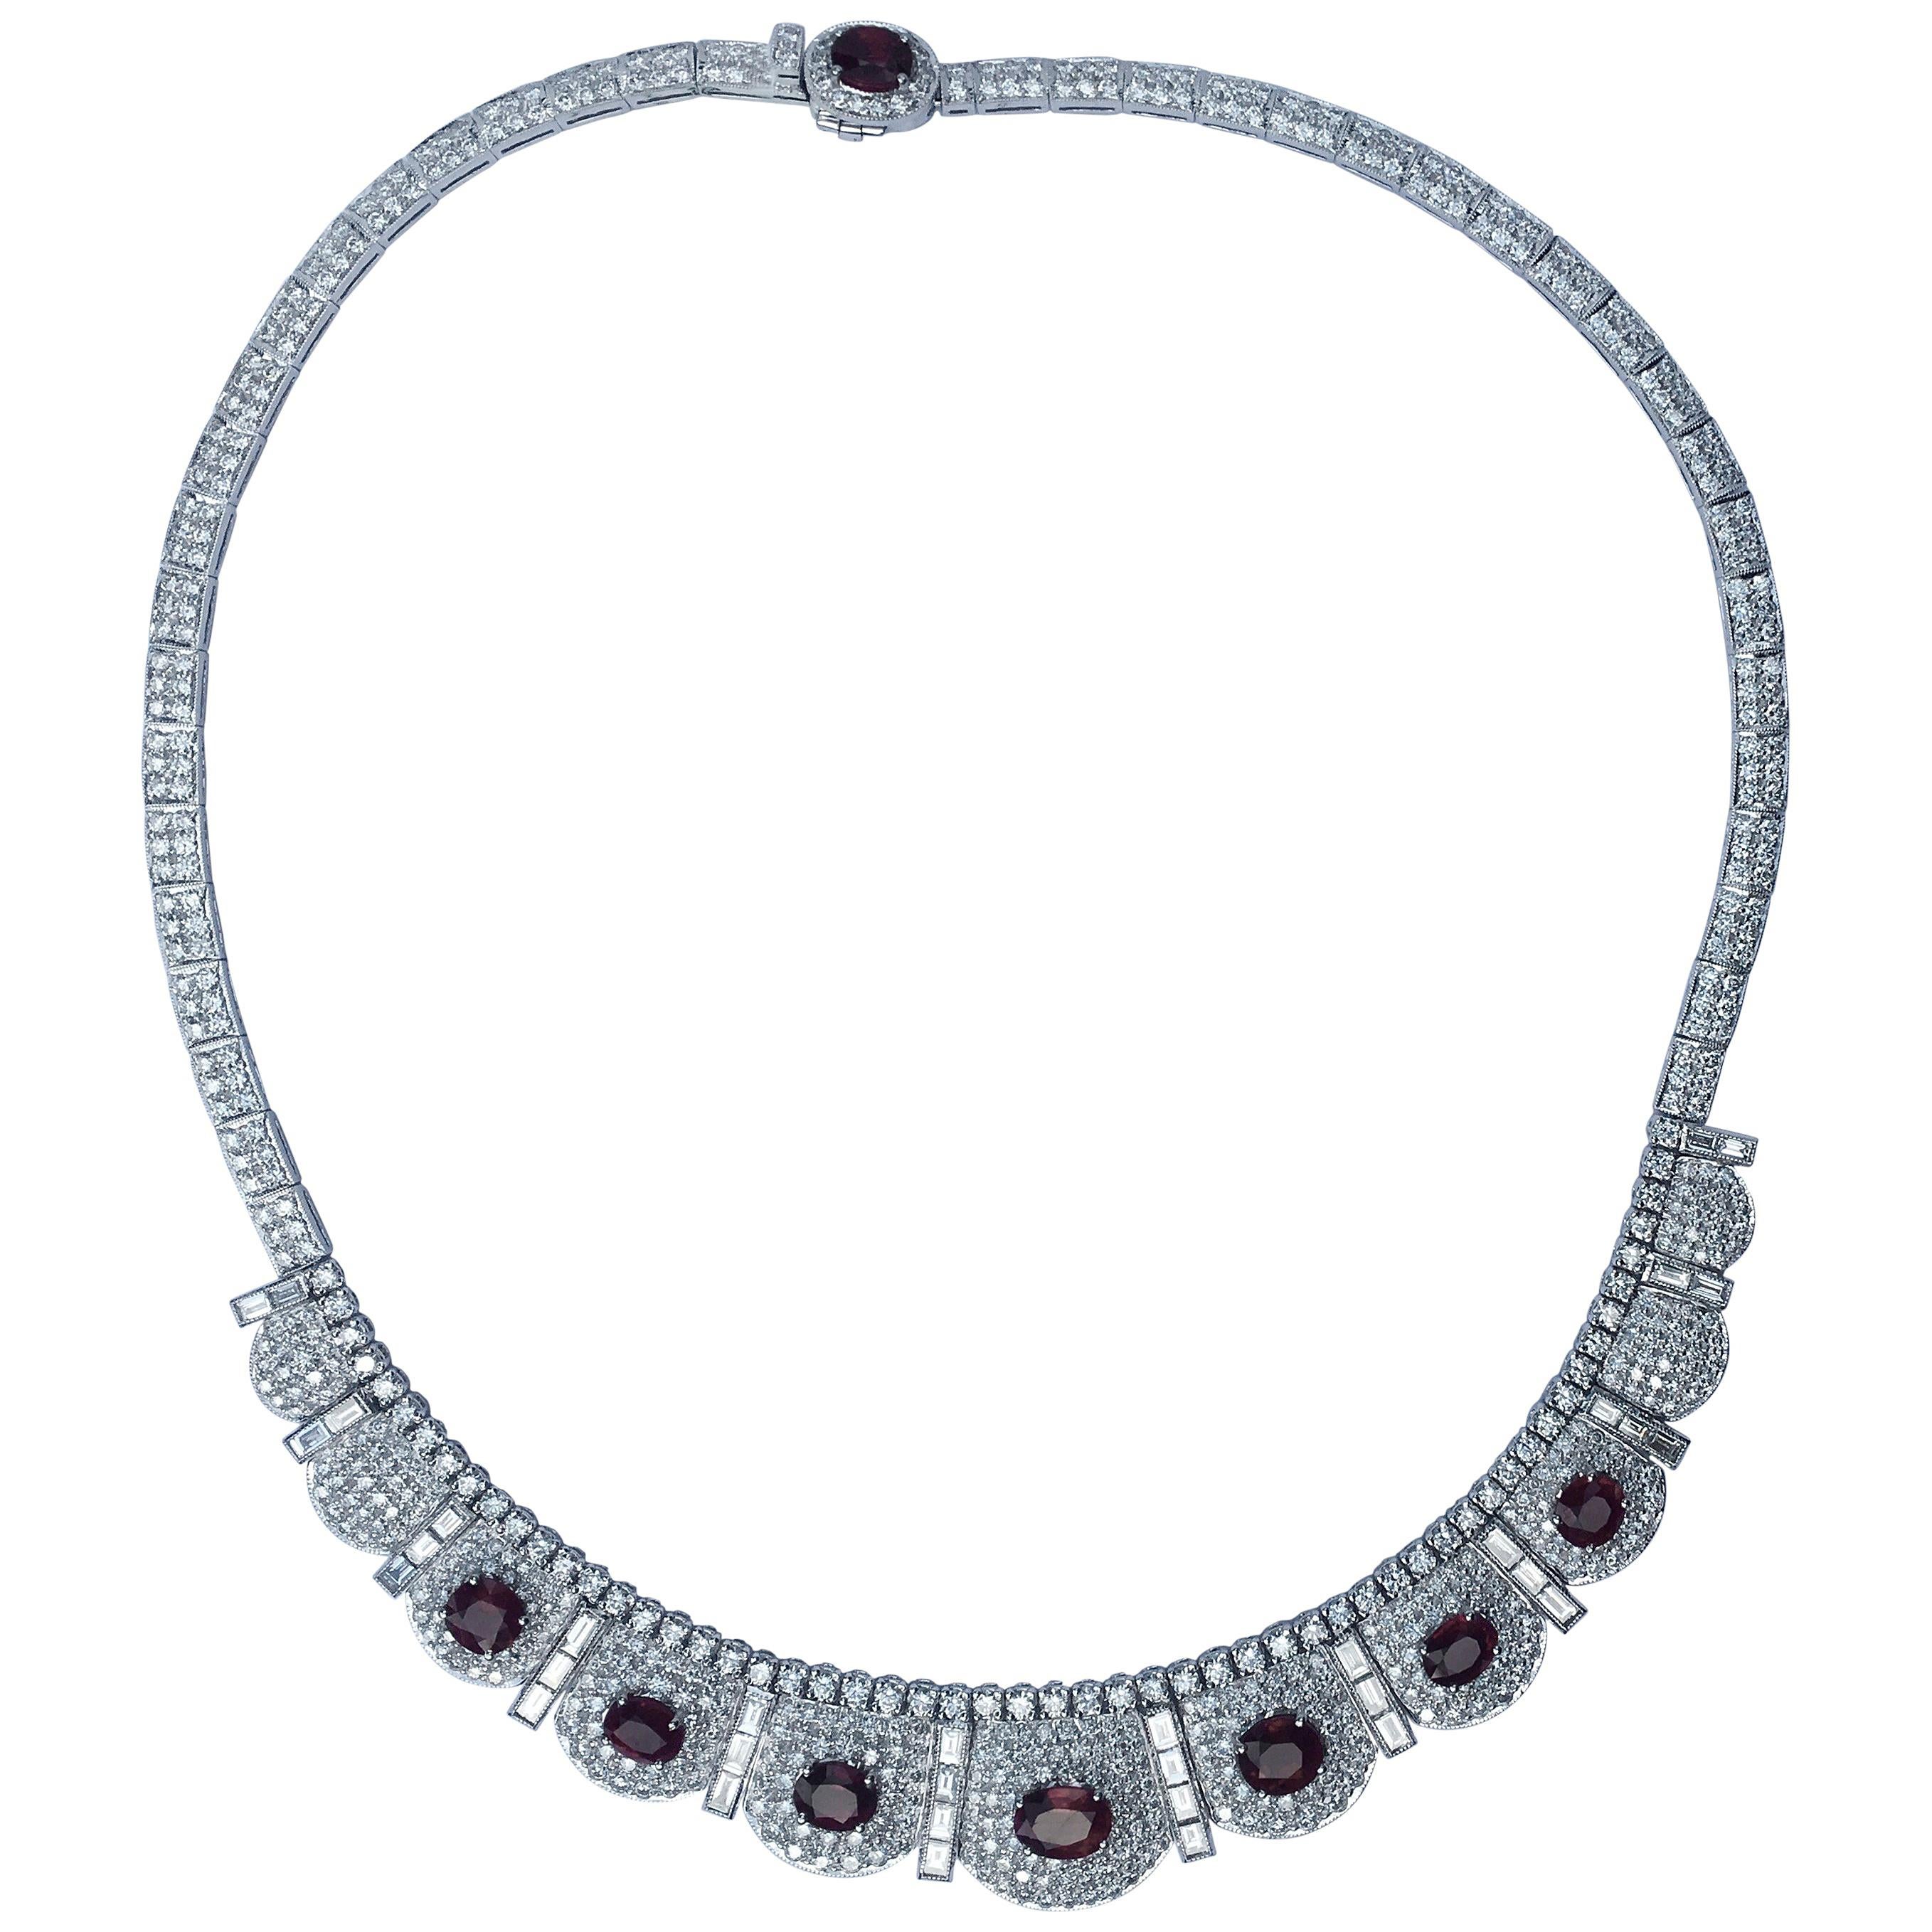 Burma Ruby Diamond Necklace Set in 18 Karat White Gold